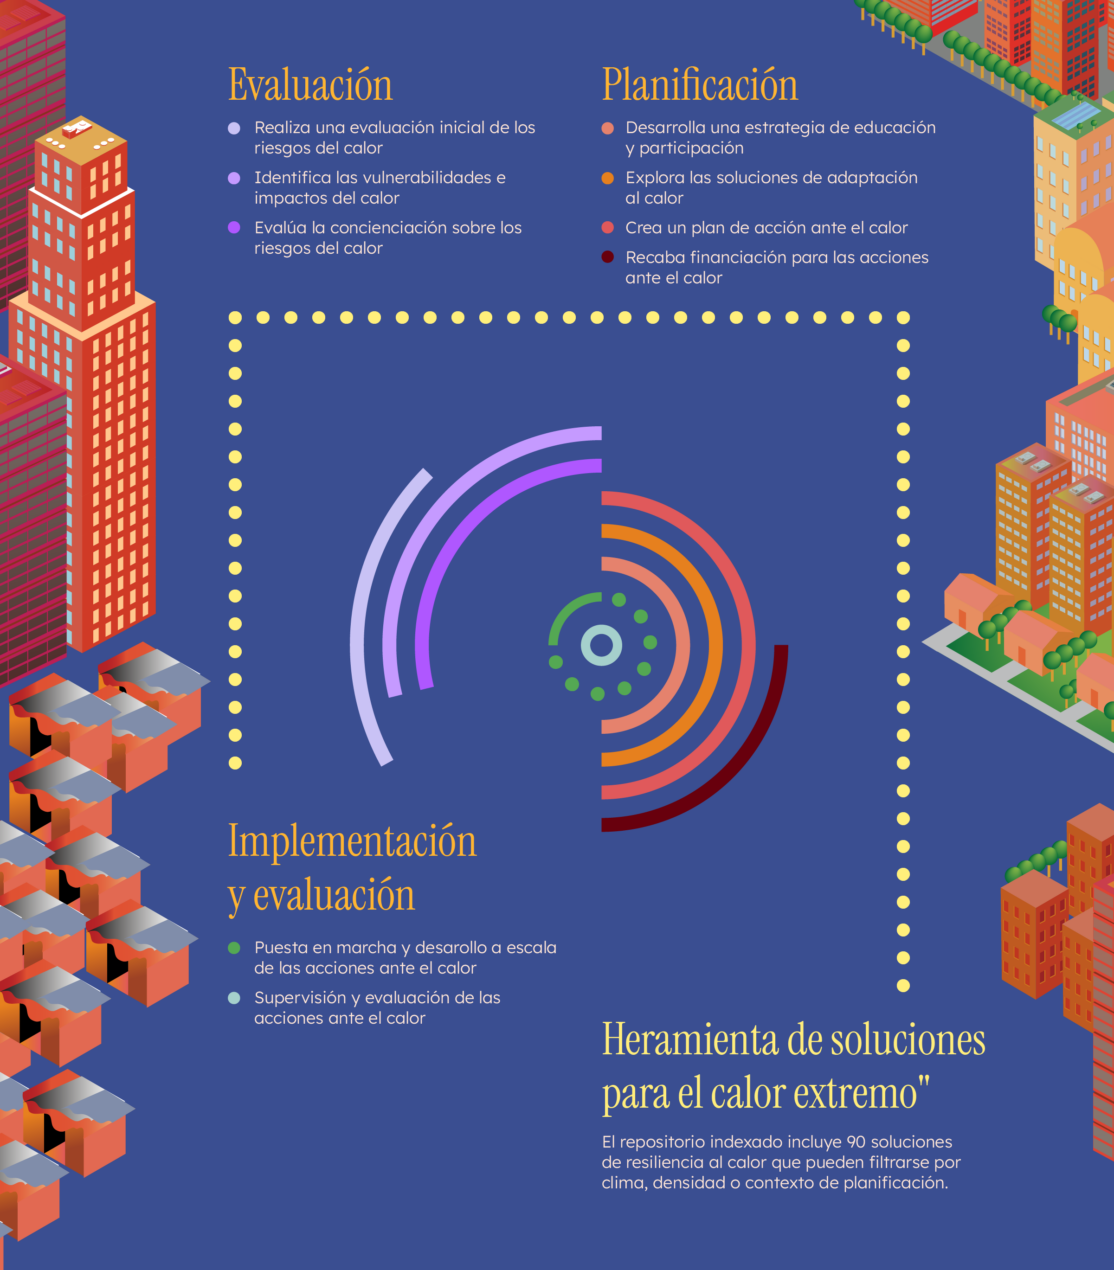 Navigating the Platform - Spanish infographic